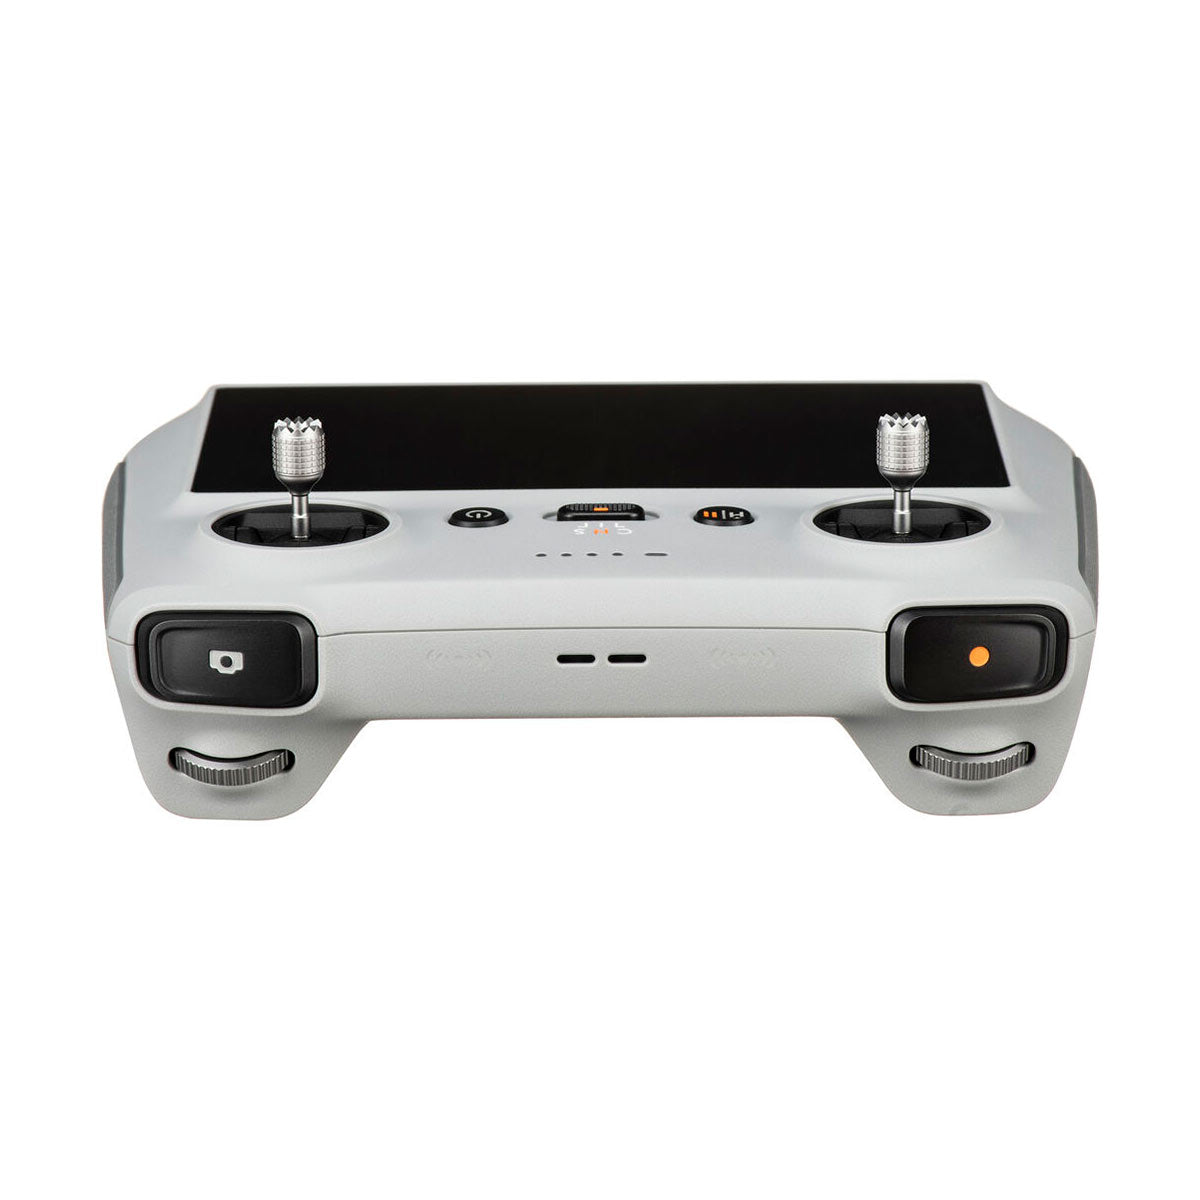 DJI RC Remote Controller for DJI Drones